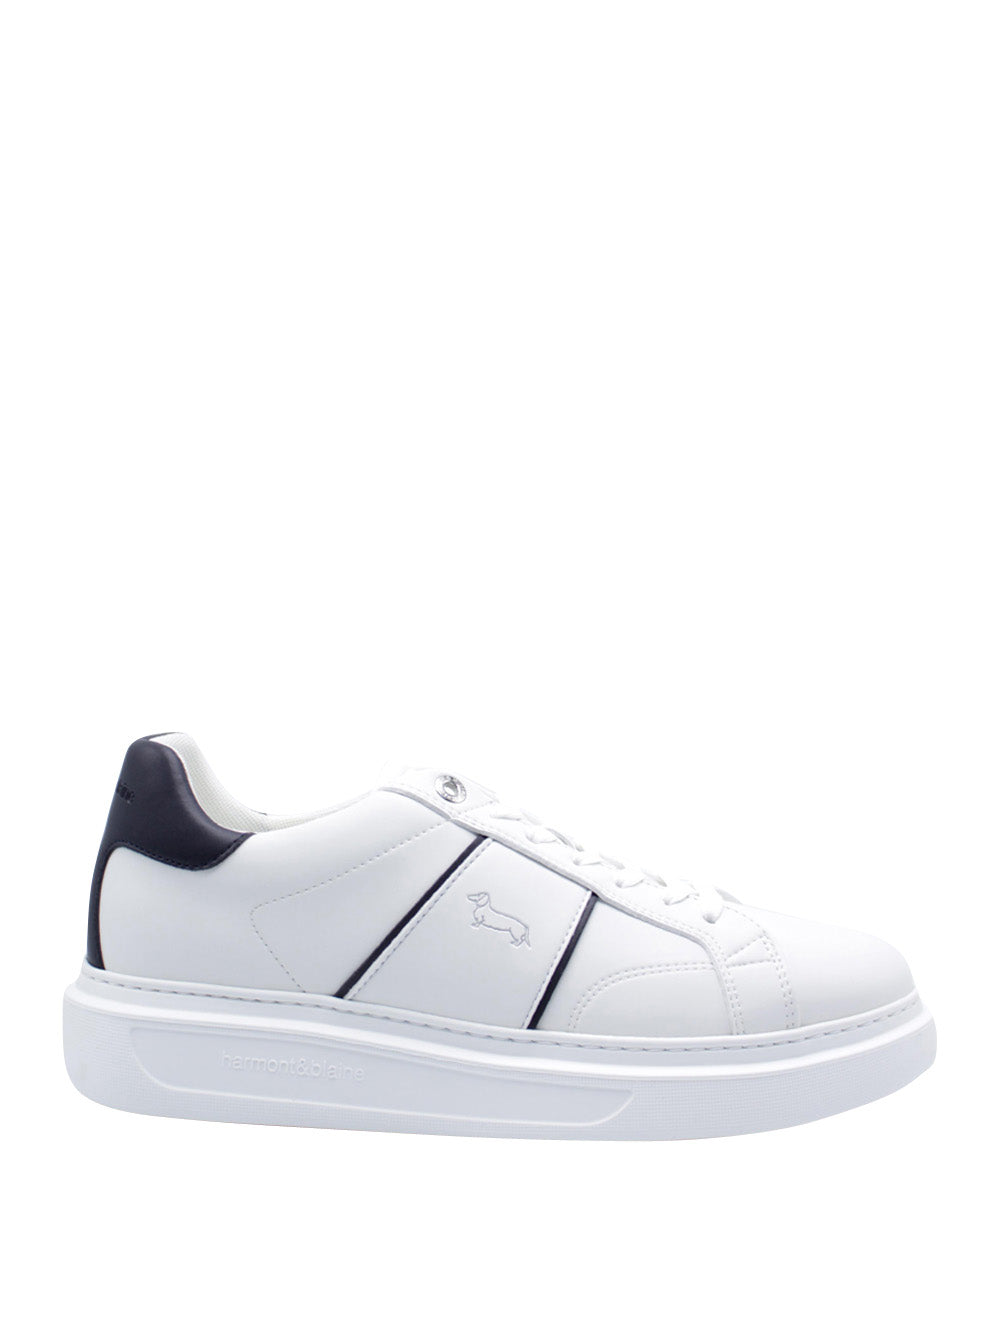 HARMONT&BLAINE Sneakers Uomo - Bianco modello EFM241.023.6010